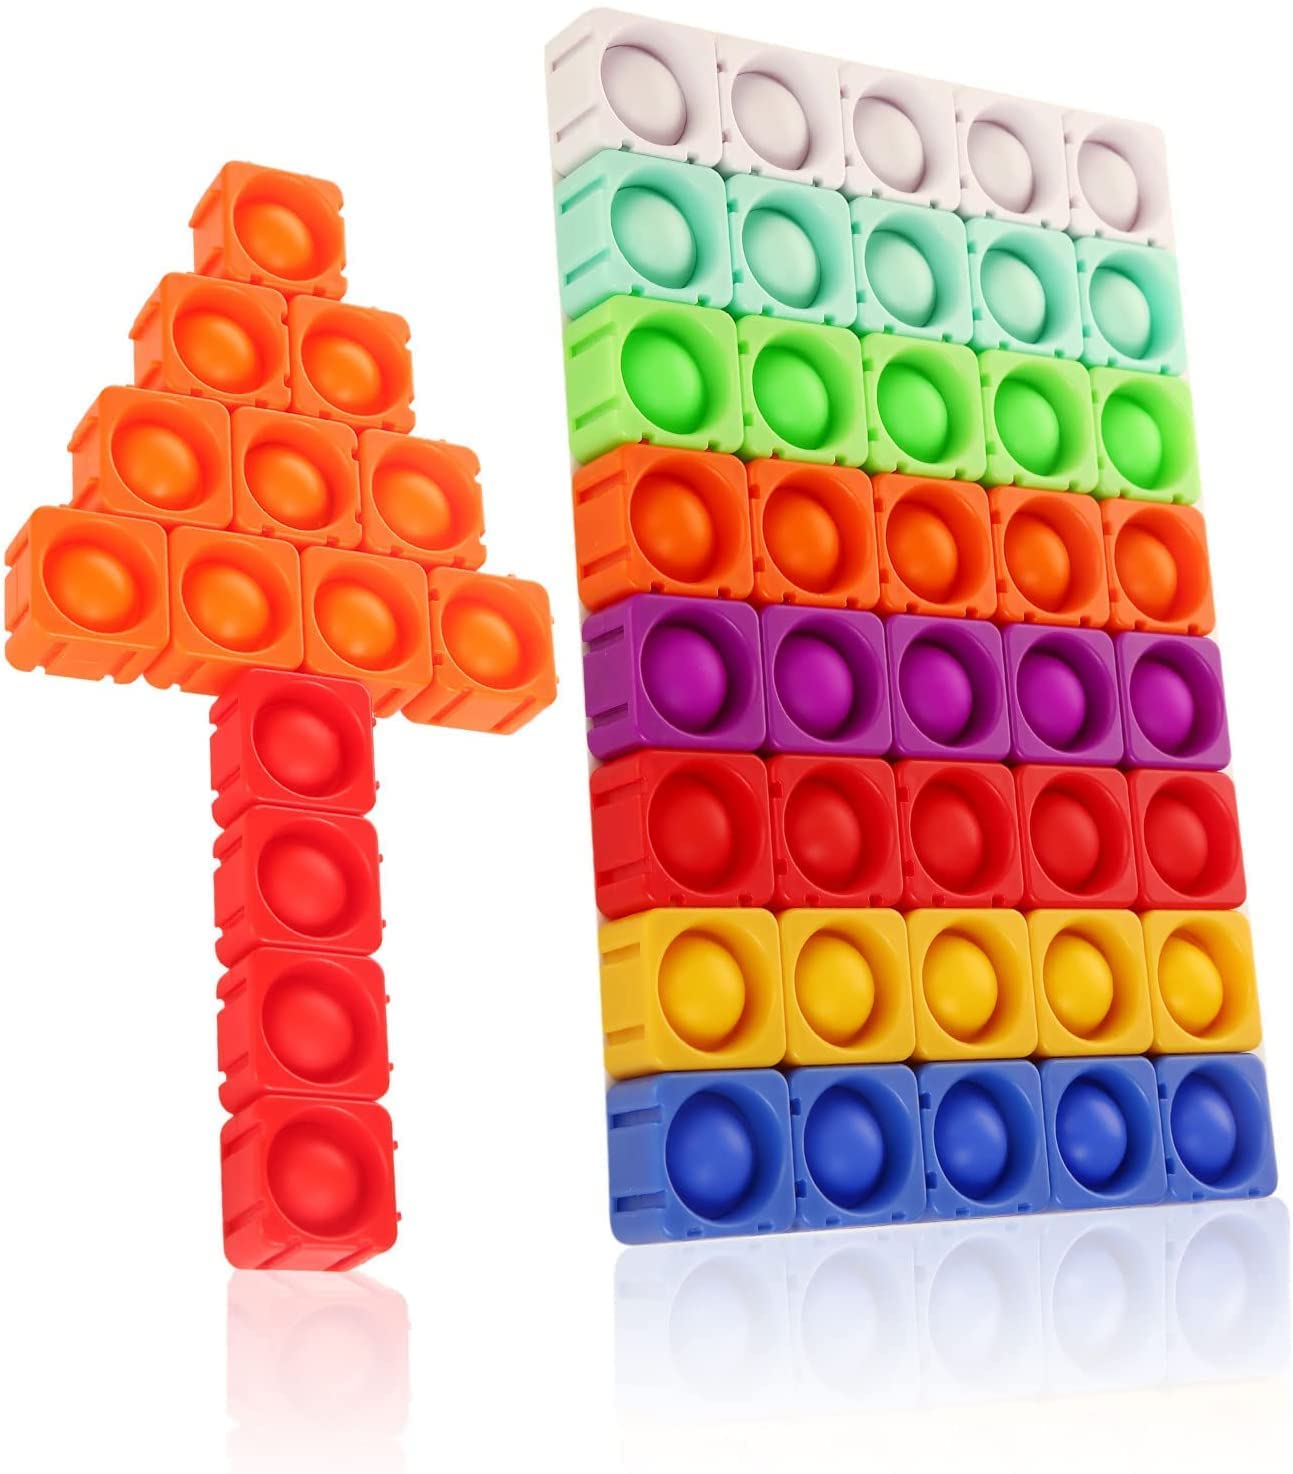 Chanak Pop It Silicone Push Pop Rainbow Puzzle Fidget Toy